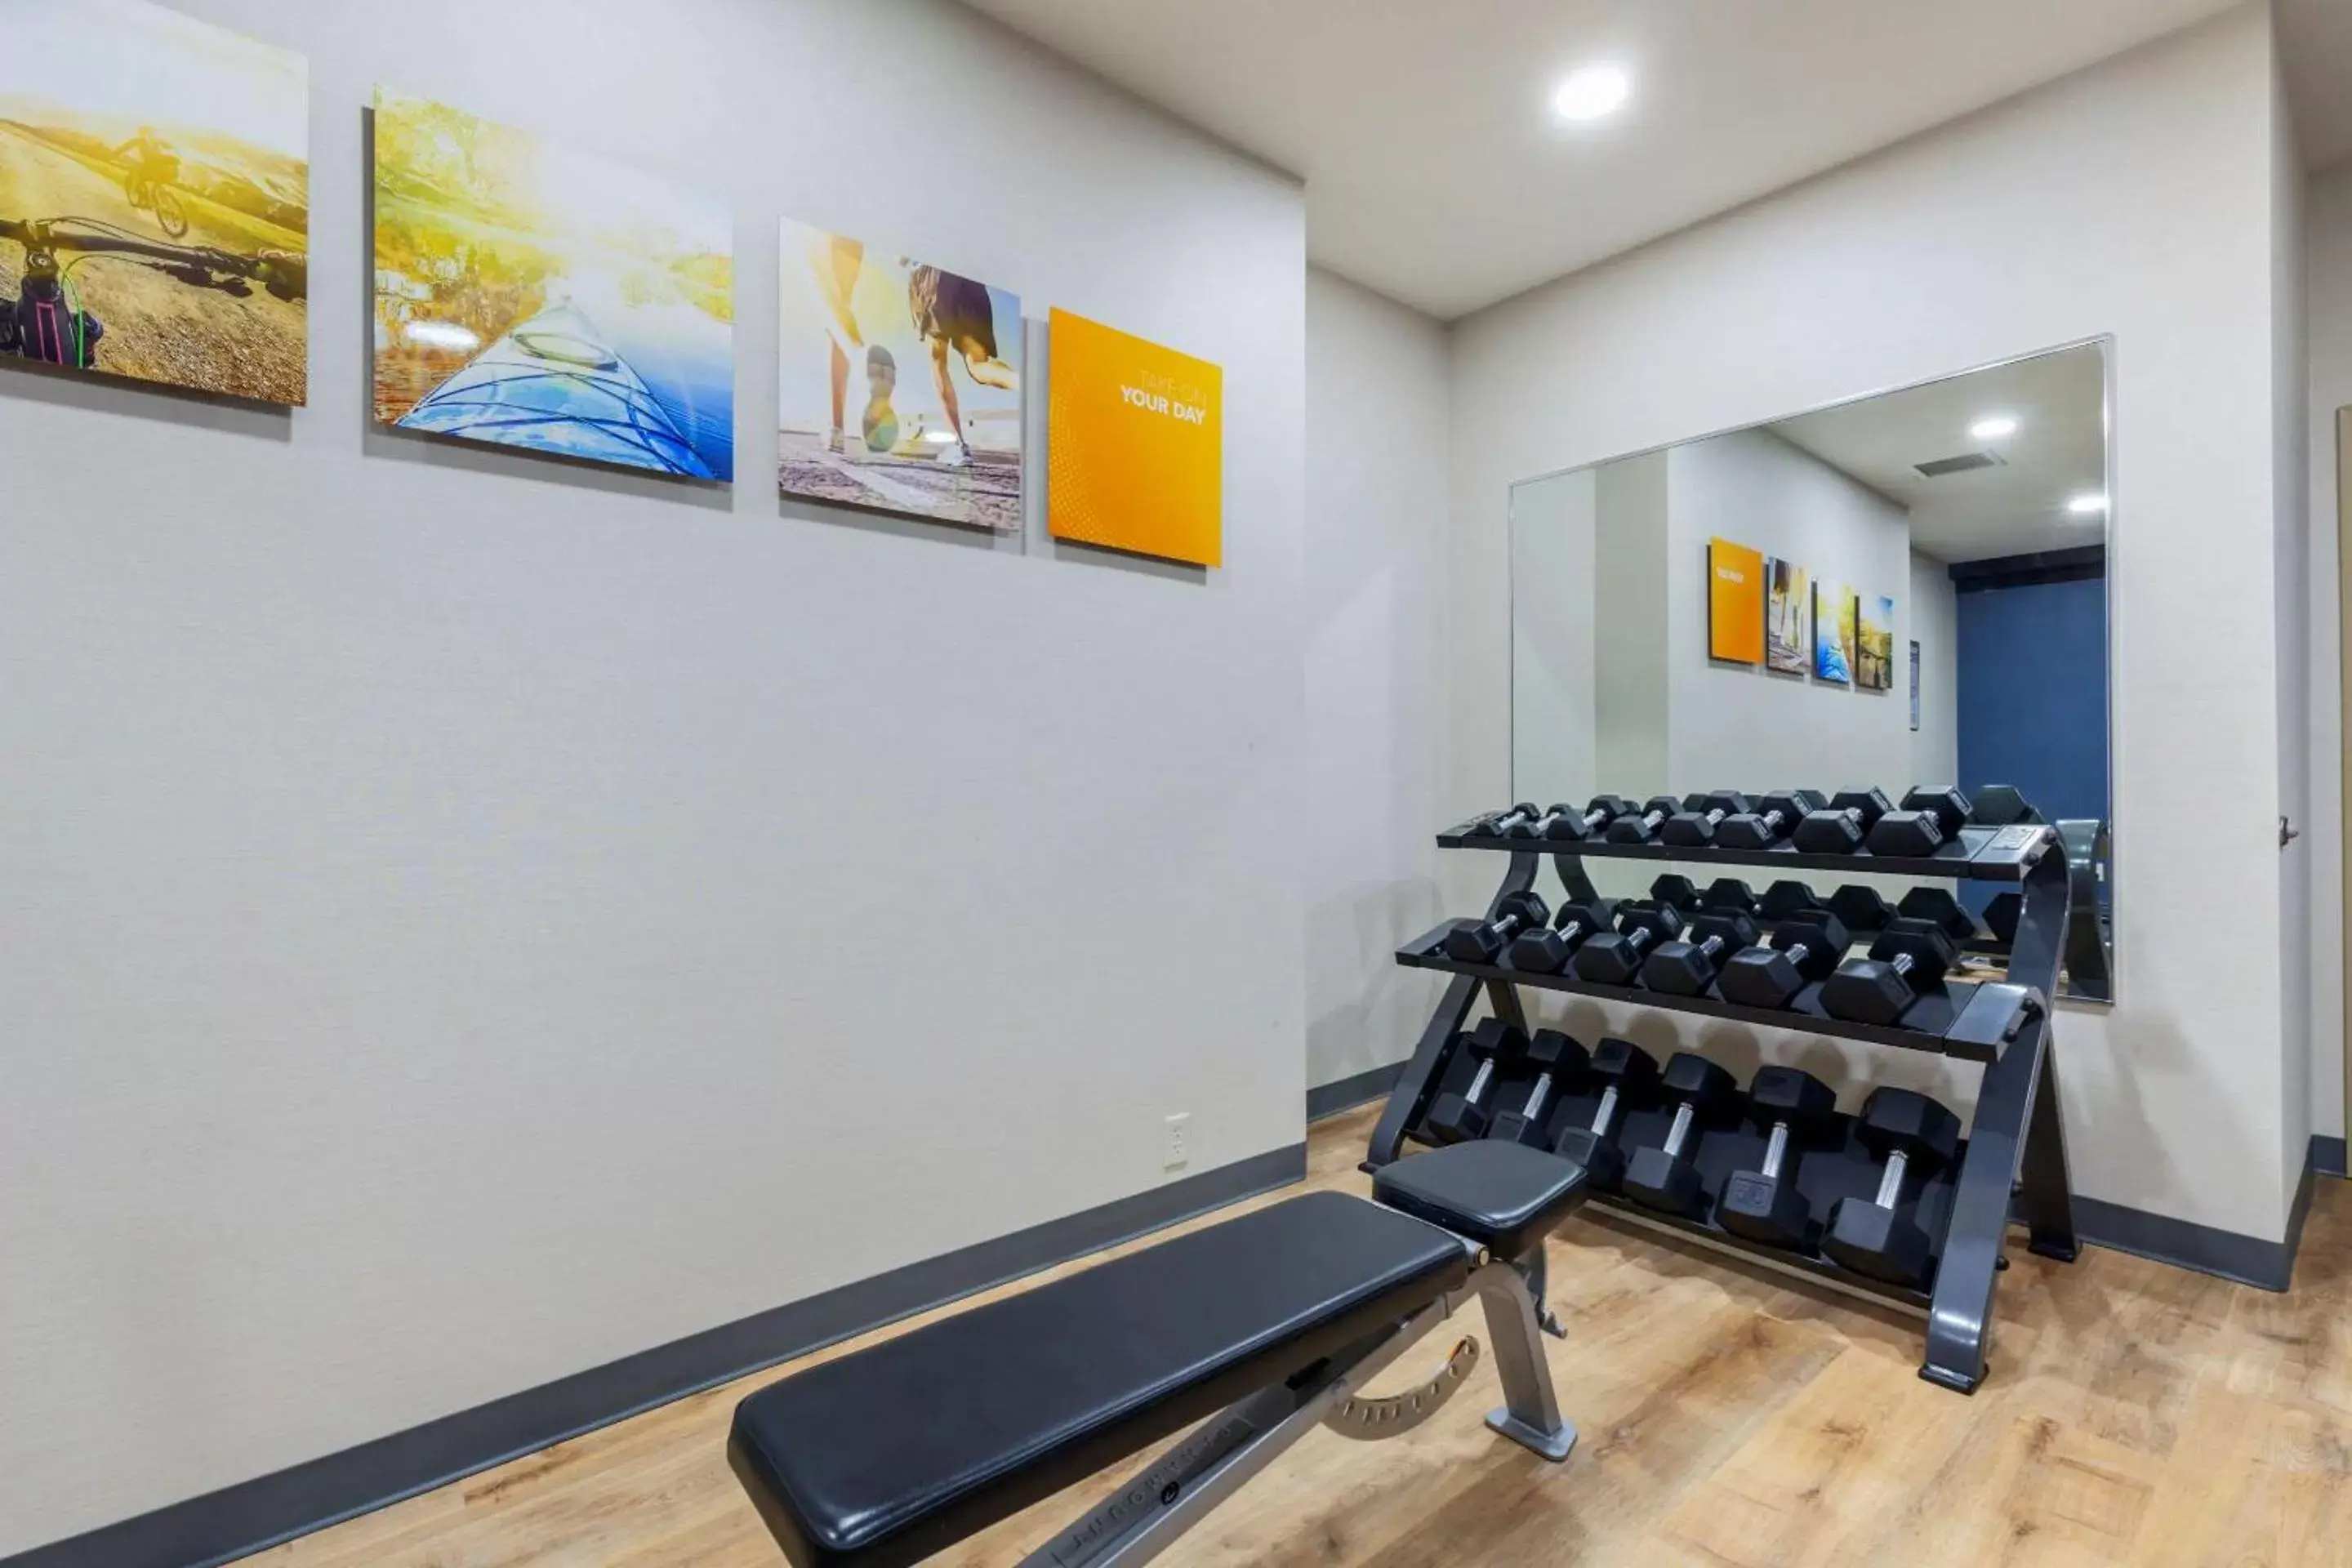 Fitness centre/facilities, Fitness Center/Facilities in Comfort Inn Plover-Stevens Point